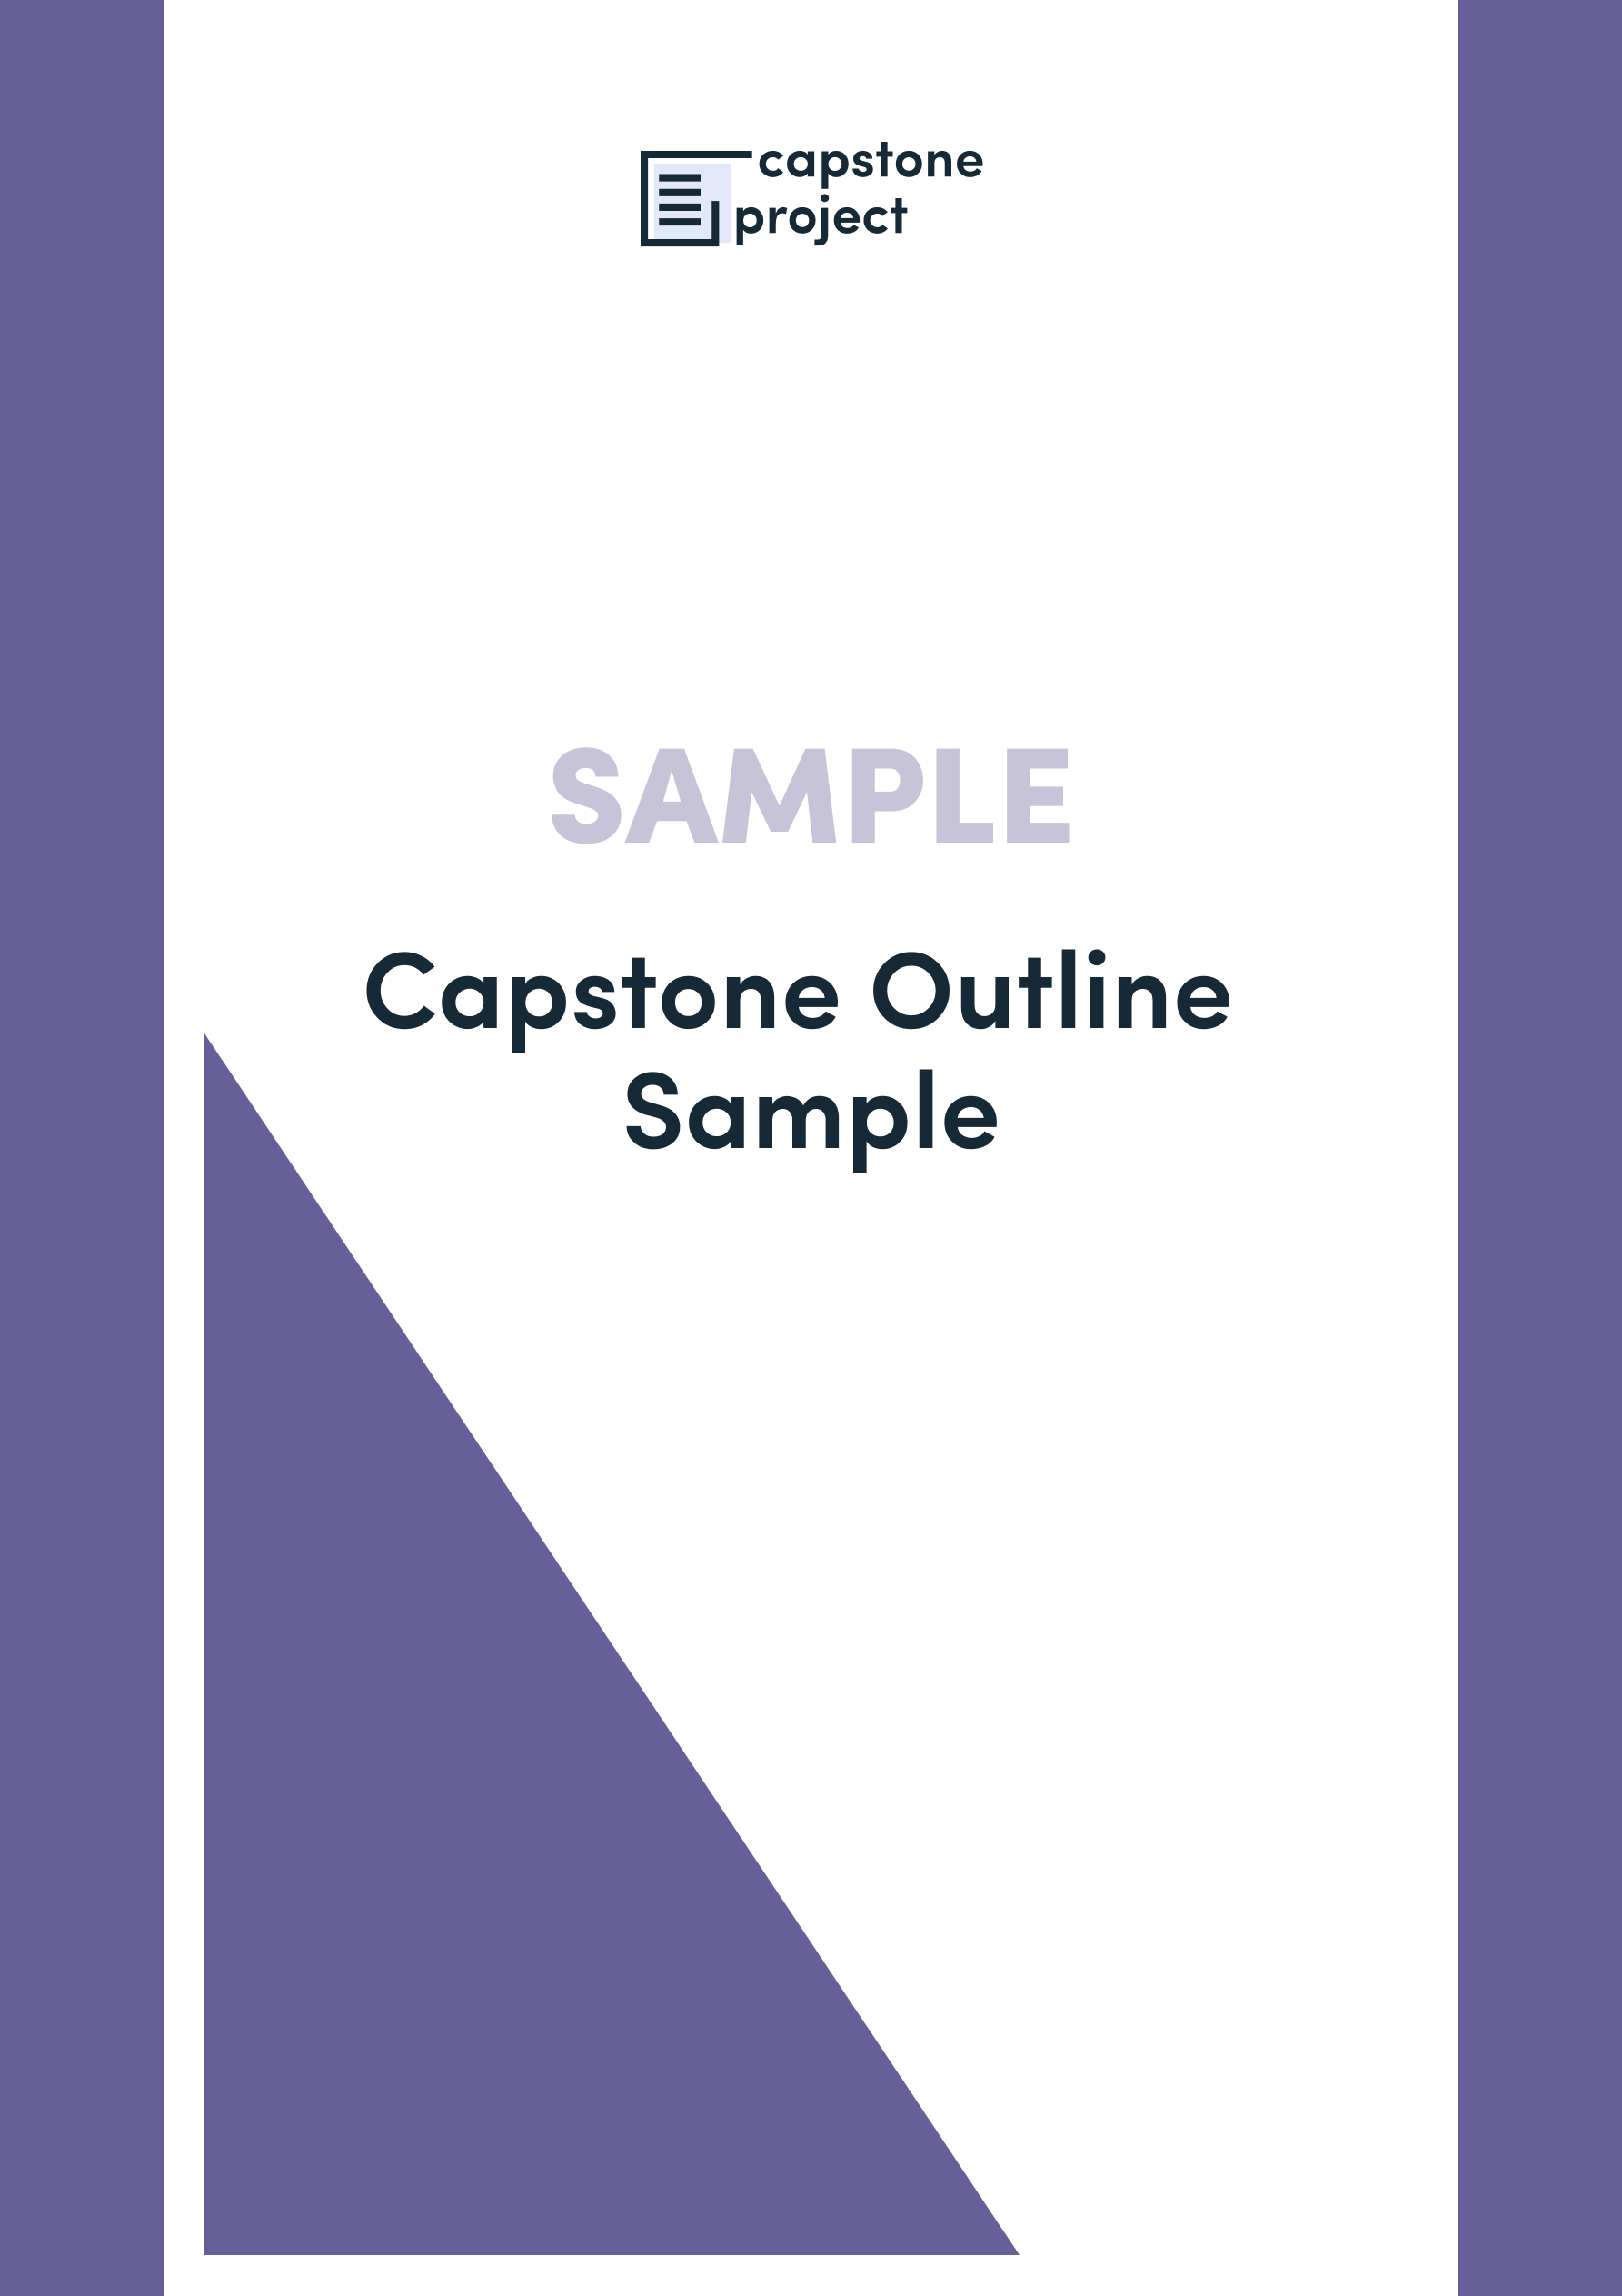 senior capstone project examples